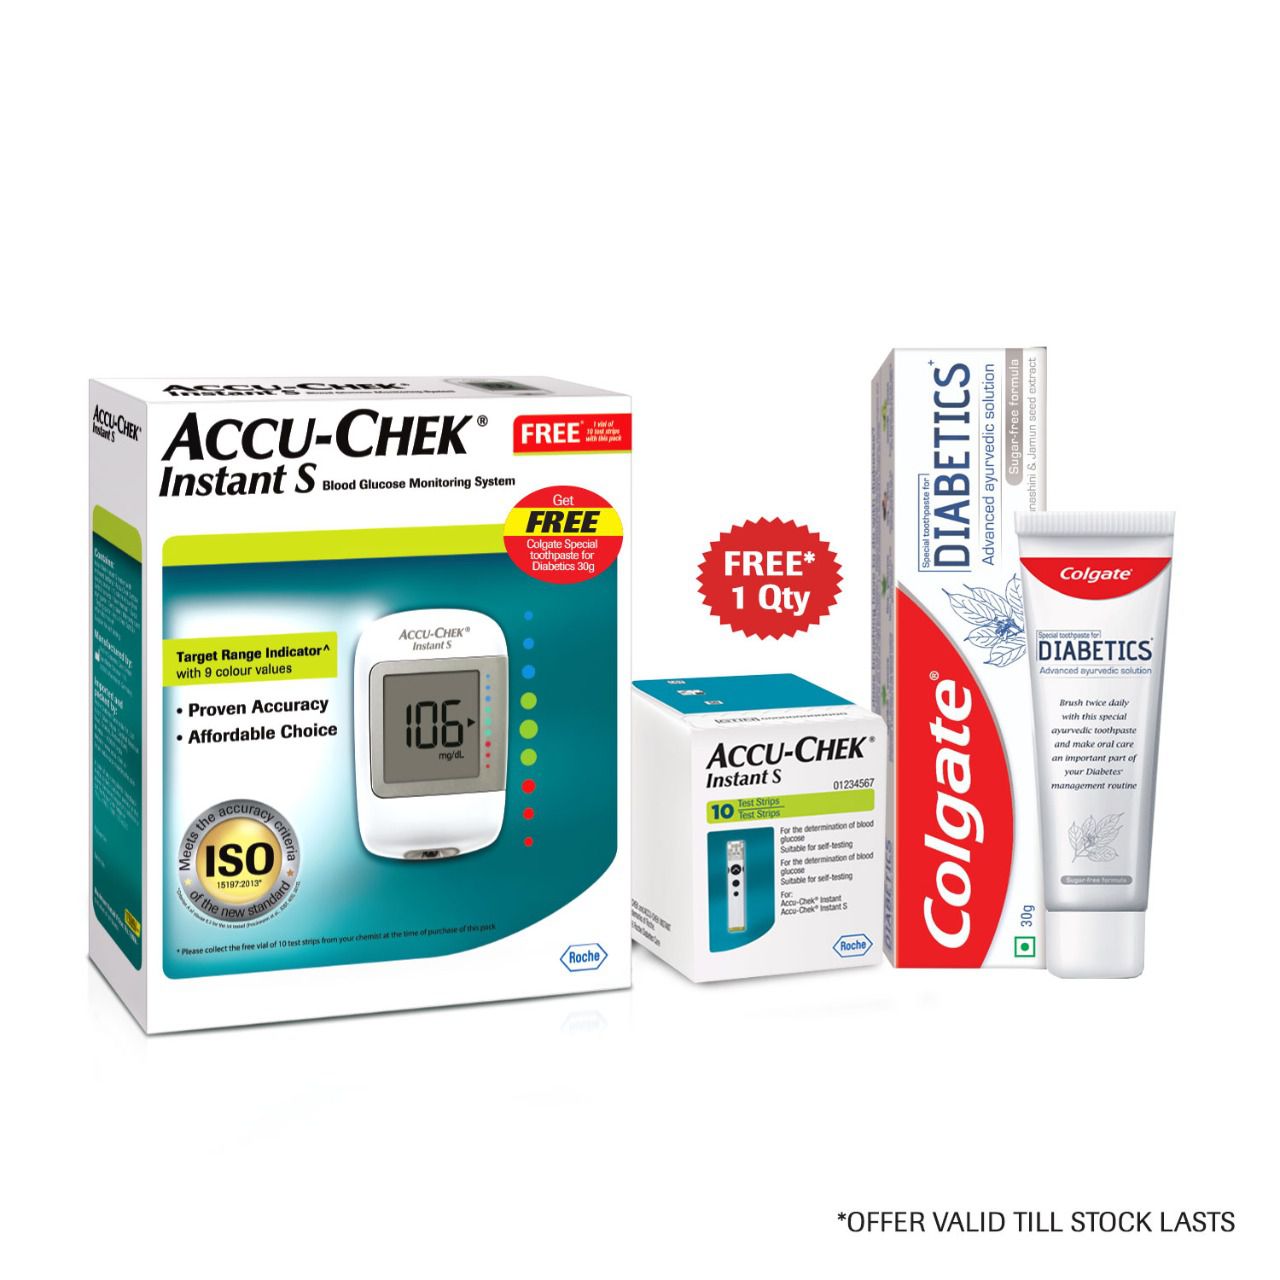 accu-chek test strips cost